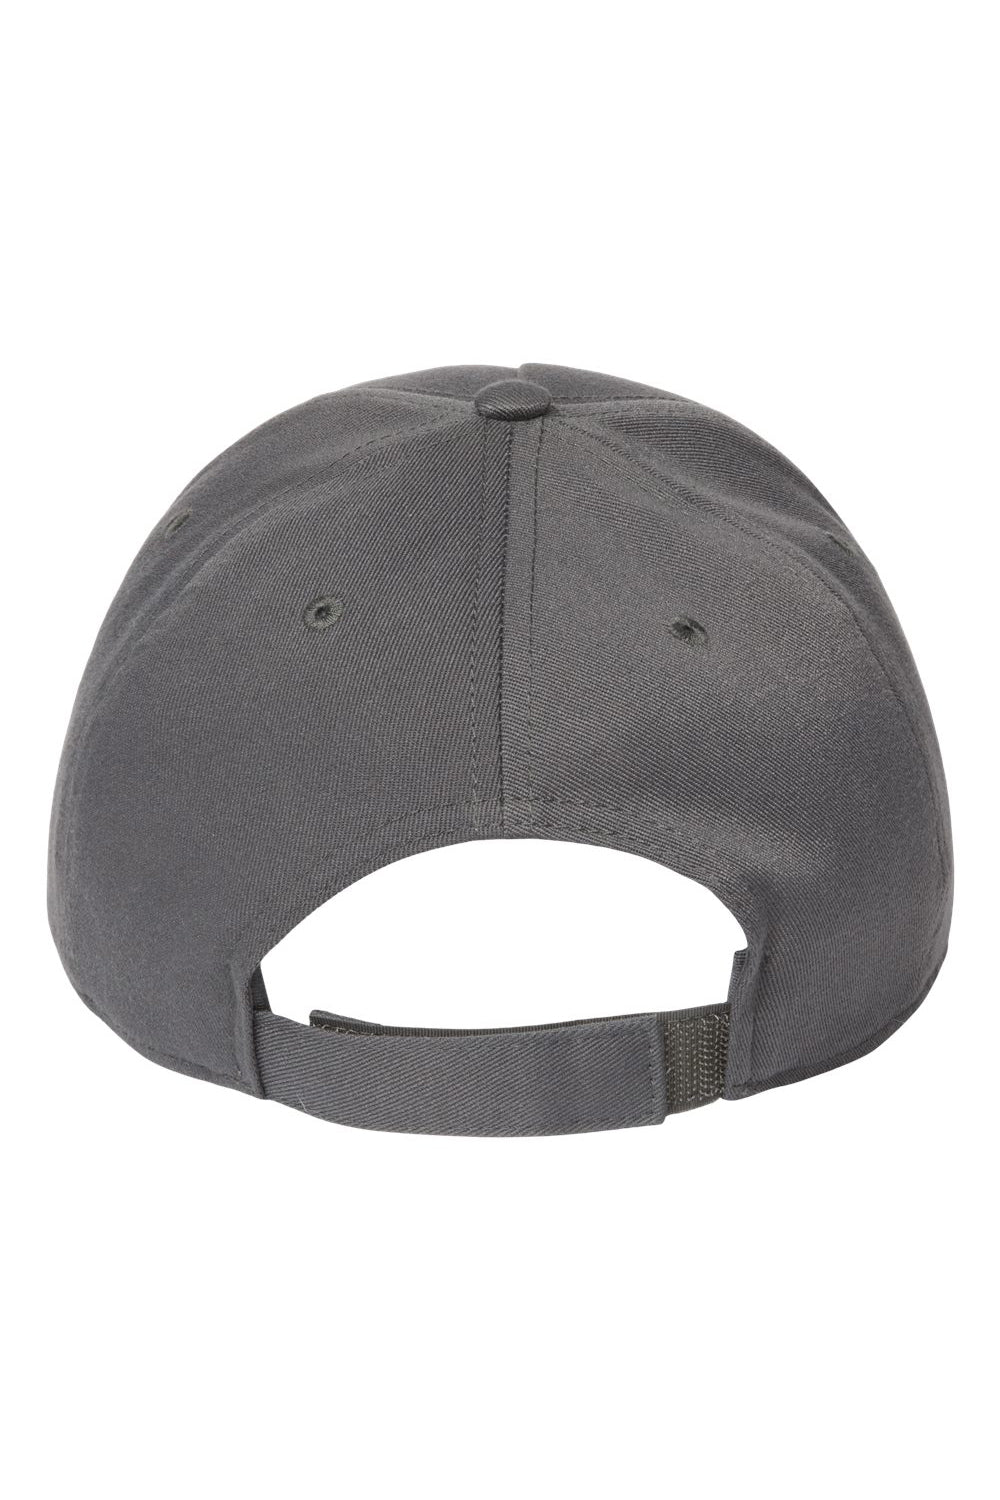 Atlantis Headwear FIJI Mens Sustainable Adjustable Hat Dark Grey Flat Back